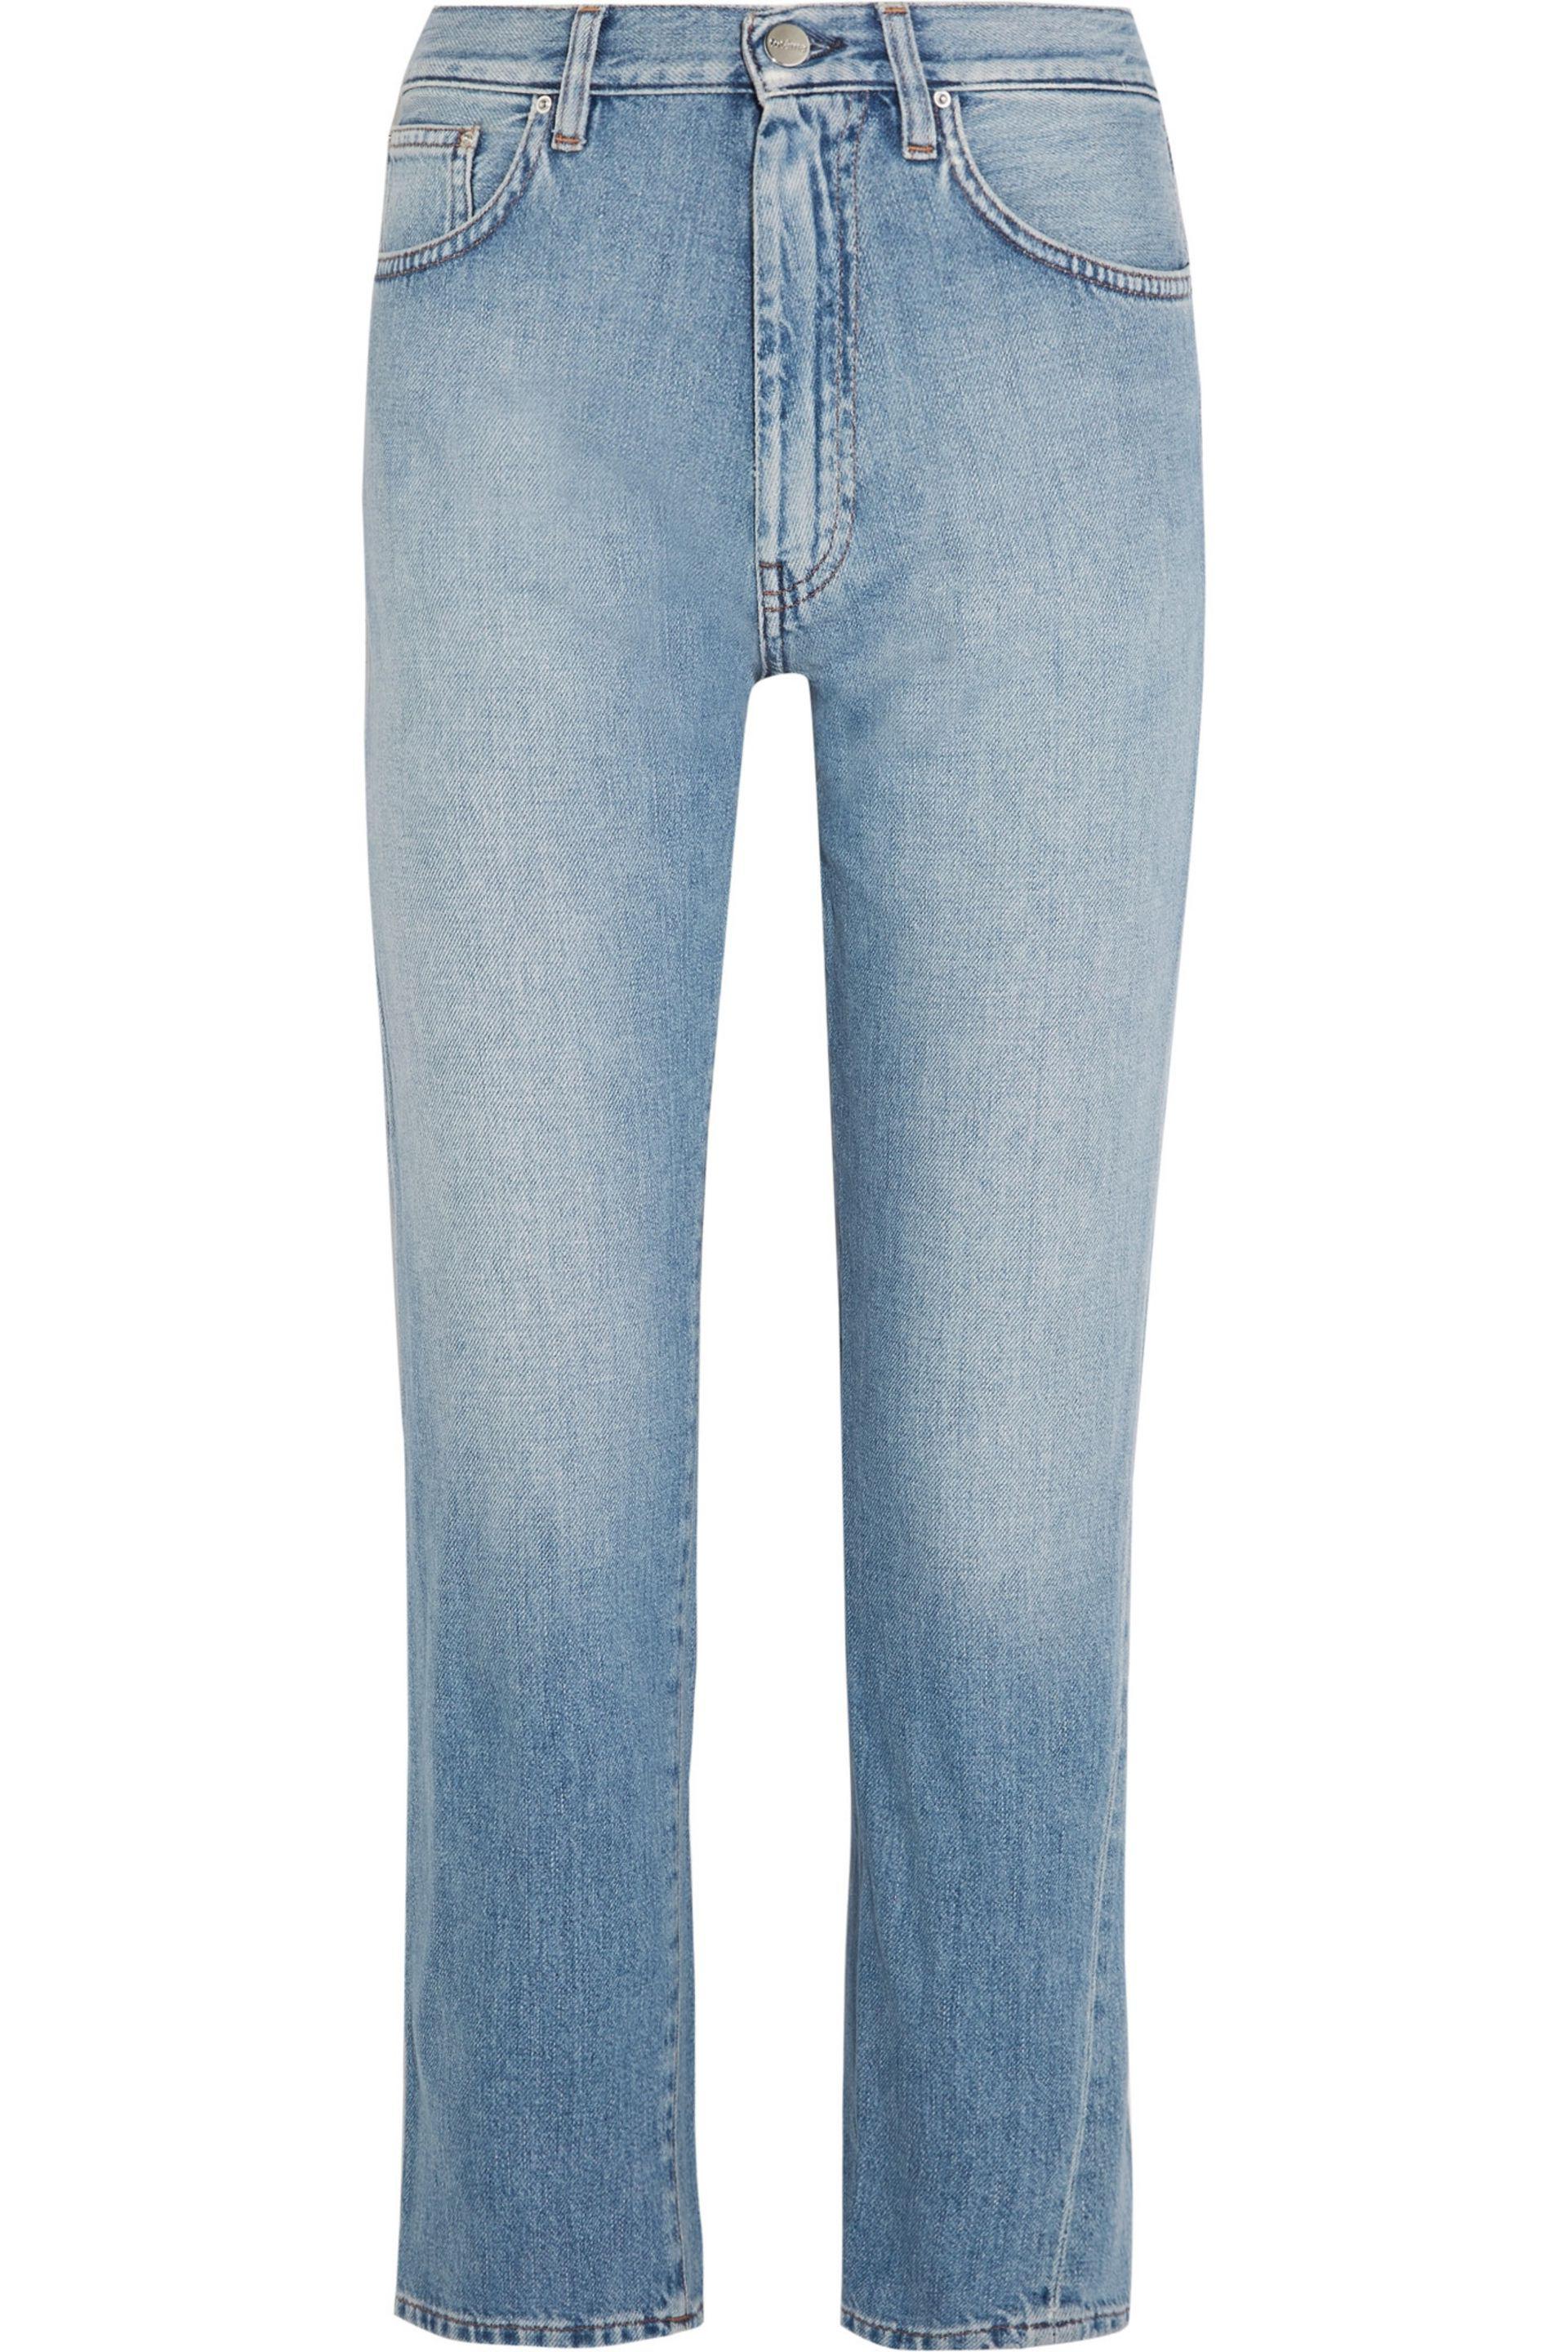 Totême Original Cropped Mid-rise Slim-leg Jeans Light Denim in Blue - Lyst